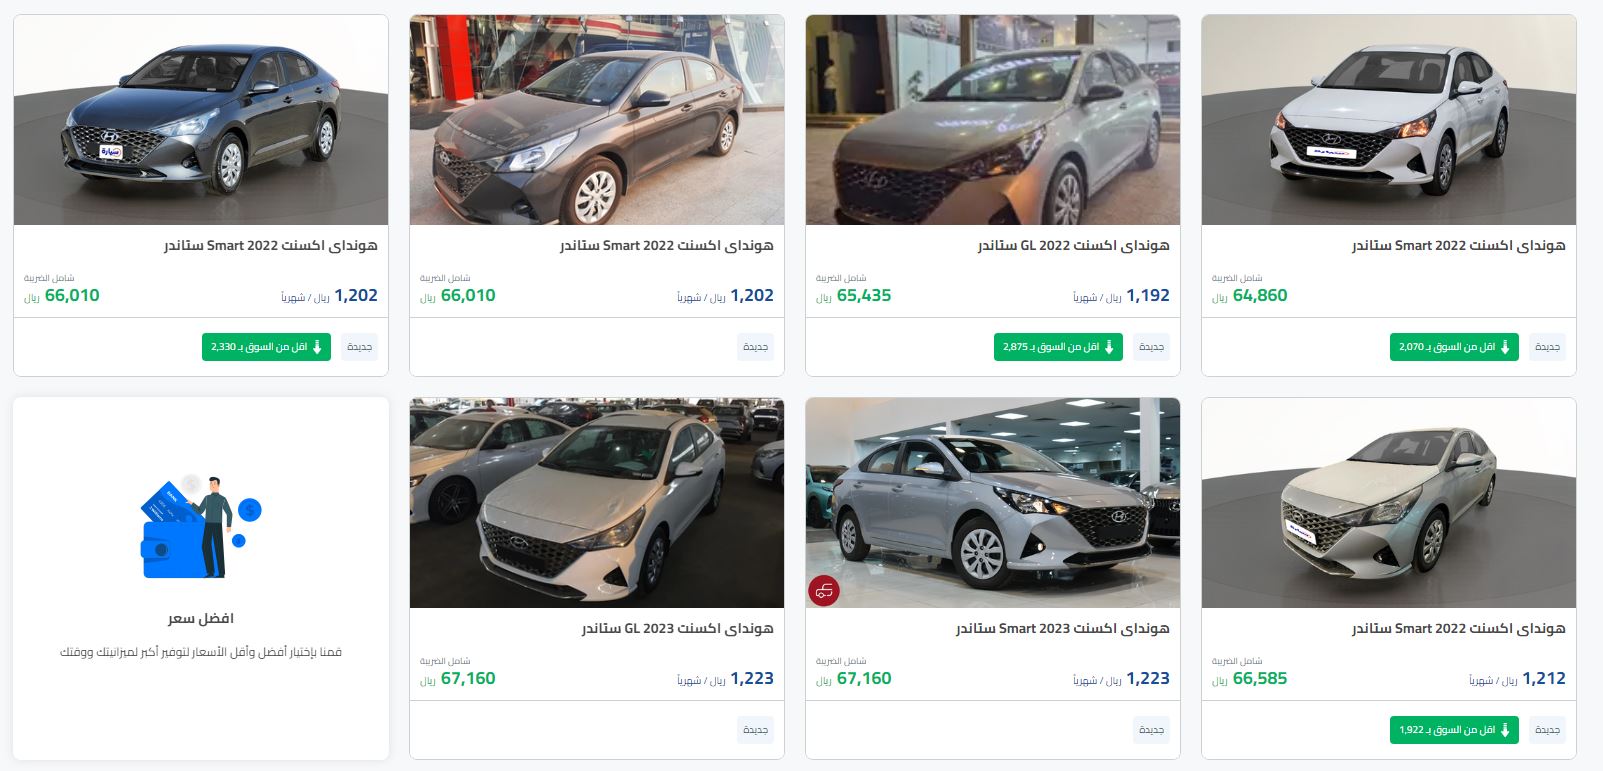 Saudi Arabia's lowest prices 2022 for new Hyundai cars